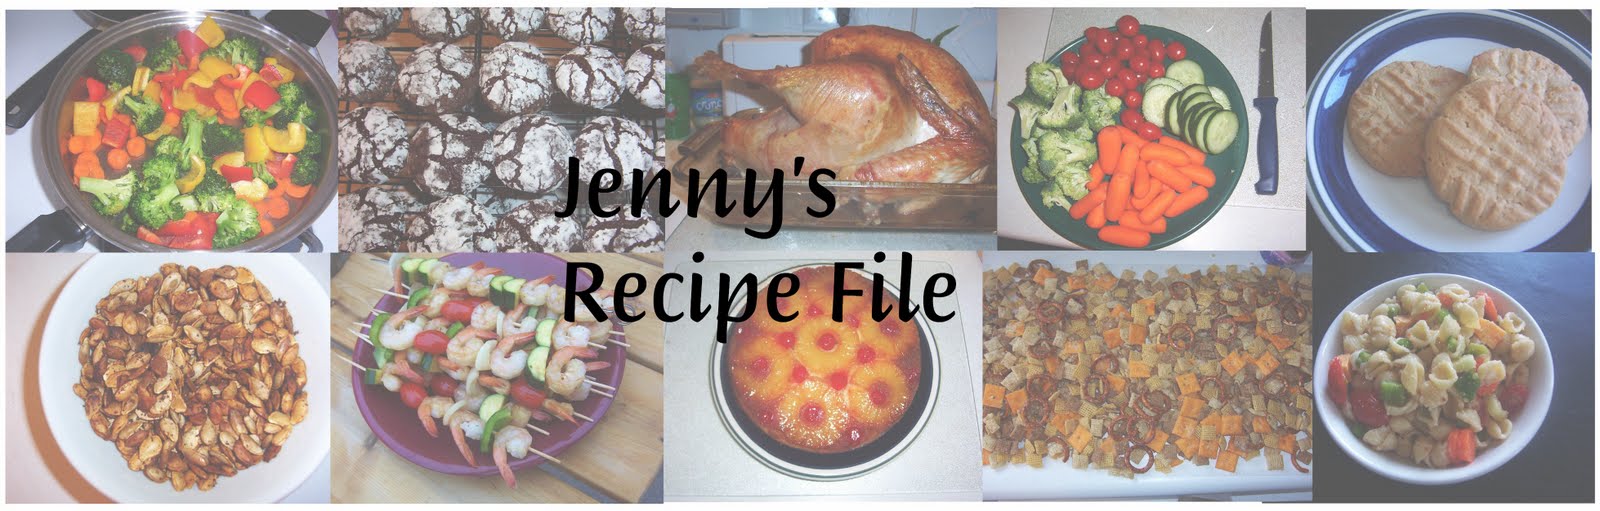 Jenny's Recipe File